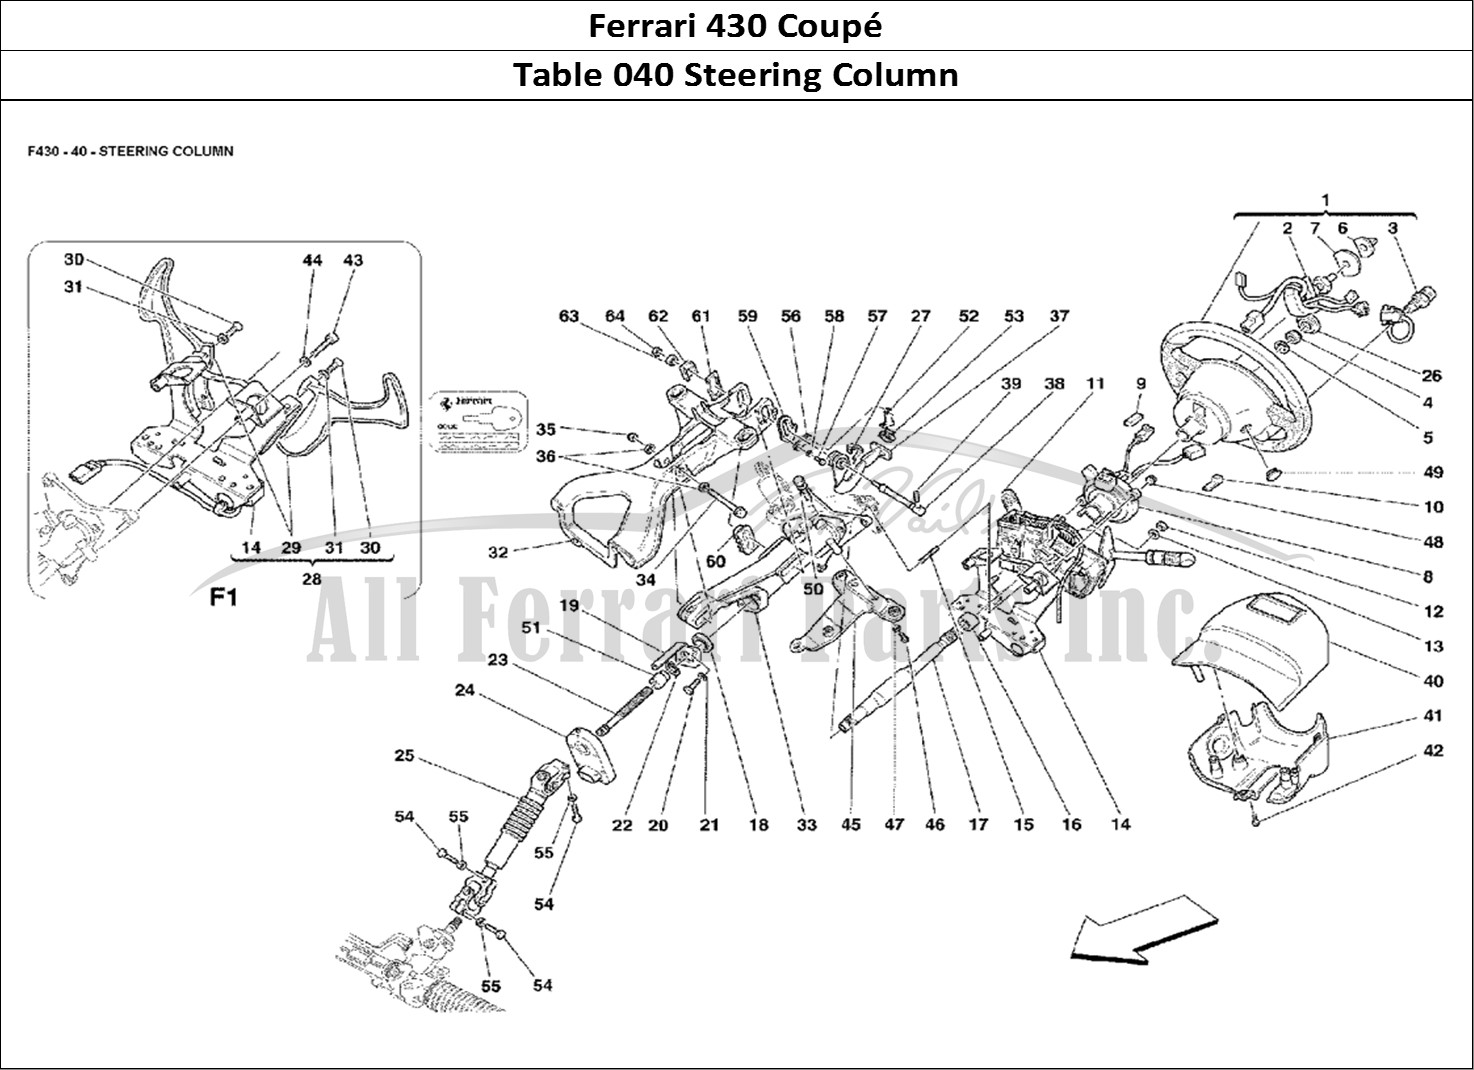 Ferrari Parts Ferrari 430 Coup Page 040 Steering Column